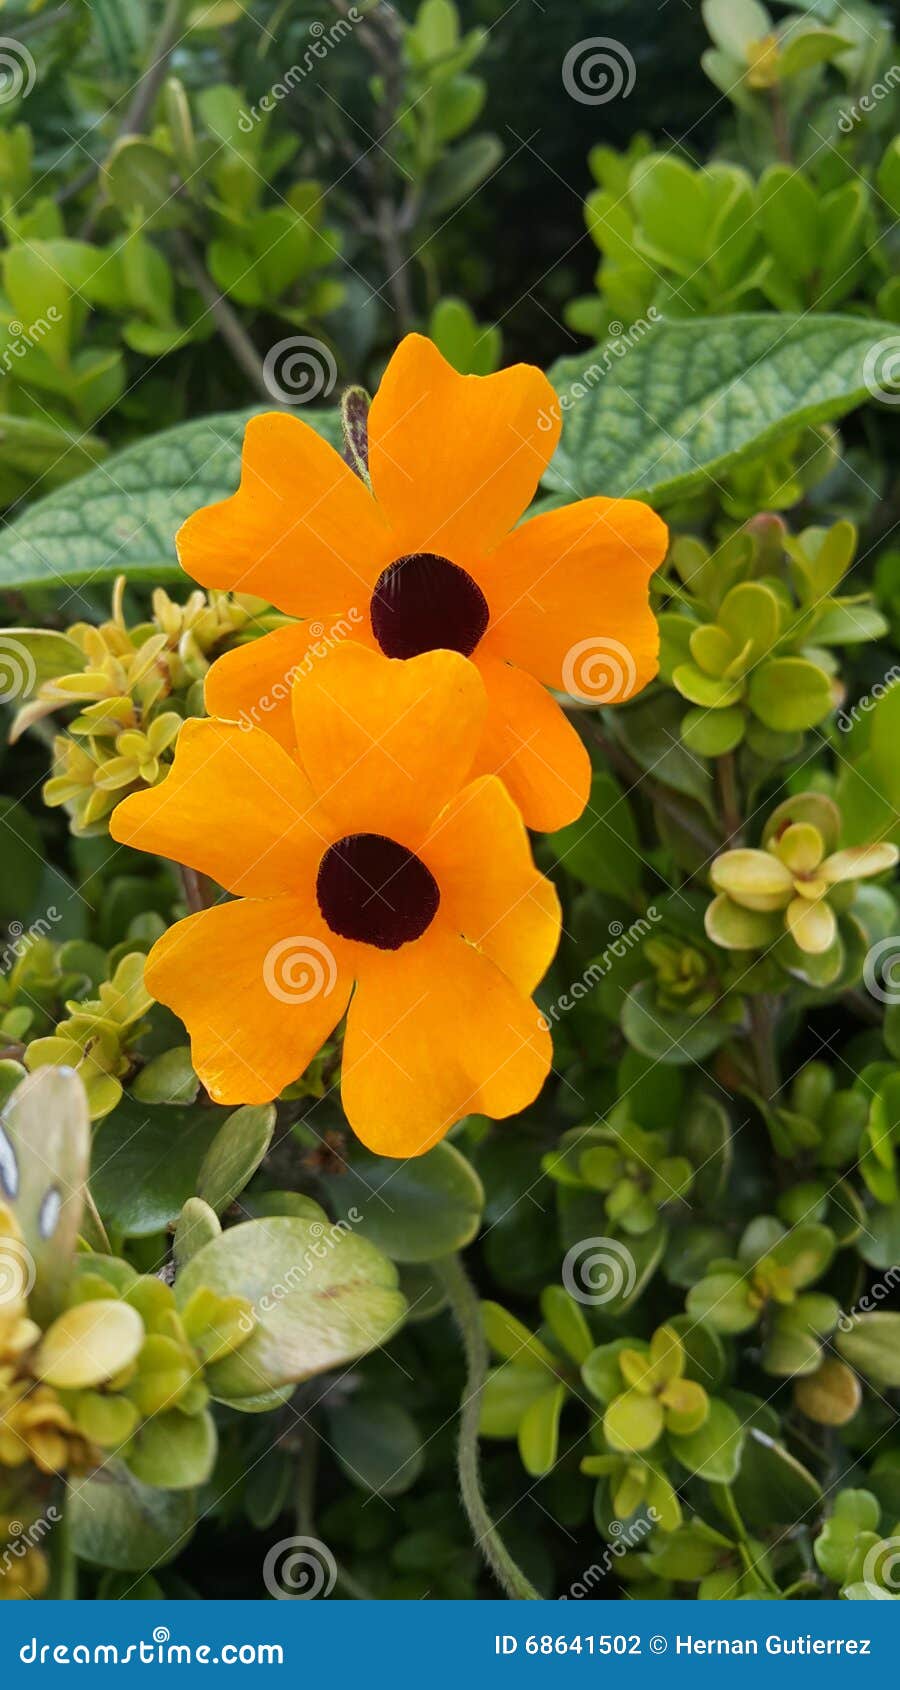 flower thunbergia alata